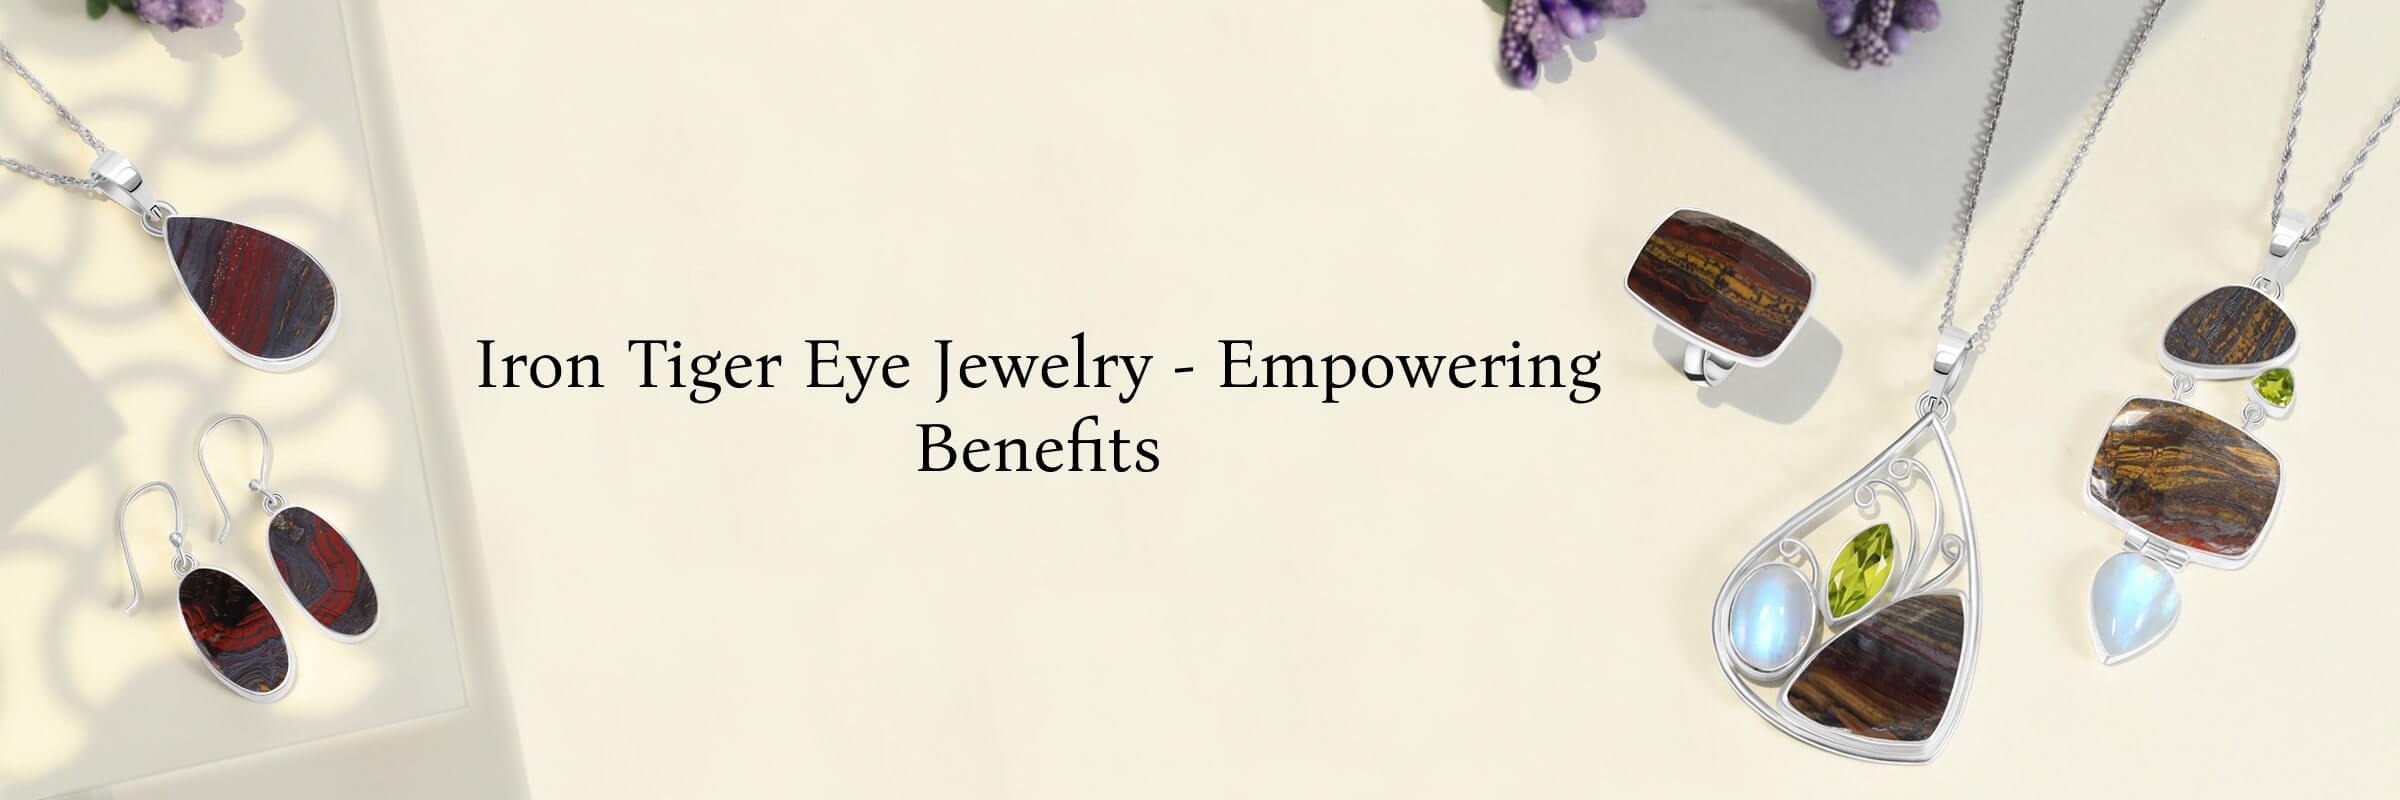 Benefits of Wearing Iron Tiger Eye Jewelry